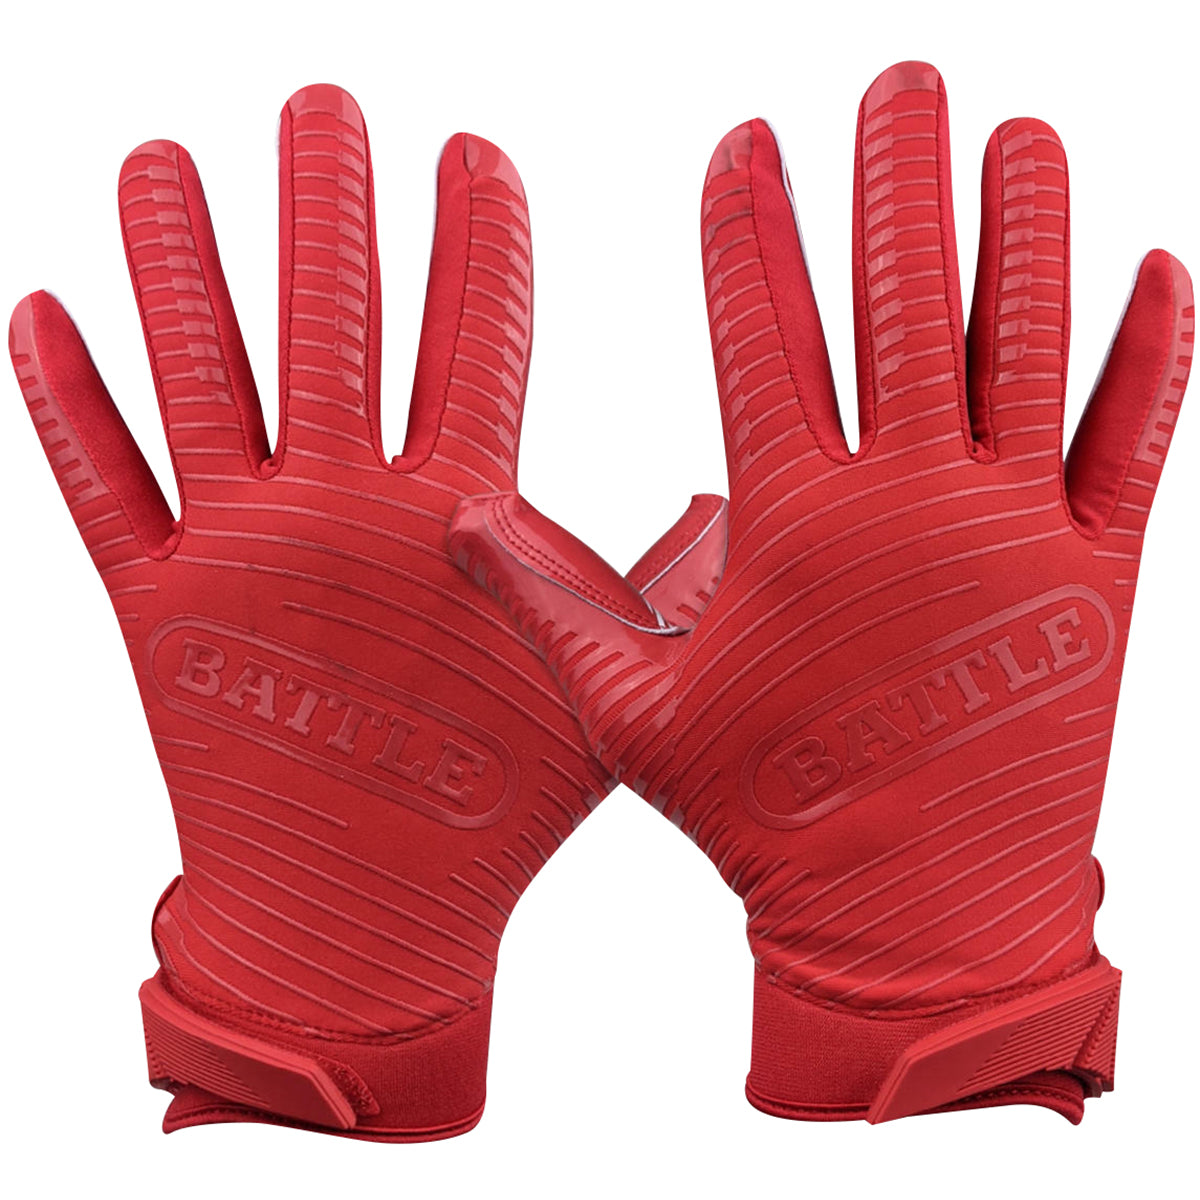 Battle Sports Doom 1.0 Adult Football Receiver Gloves - Red Battle Sports